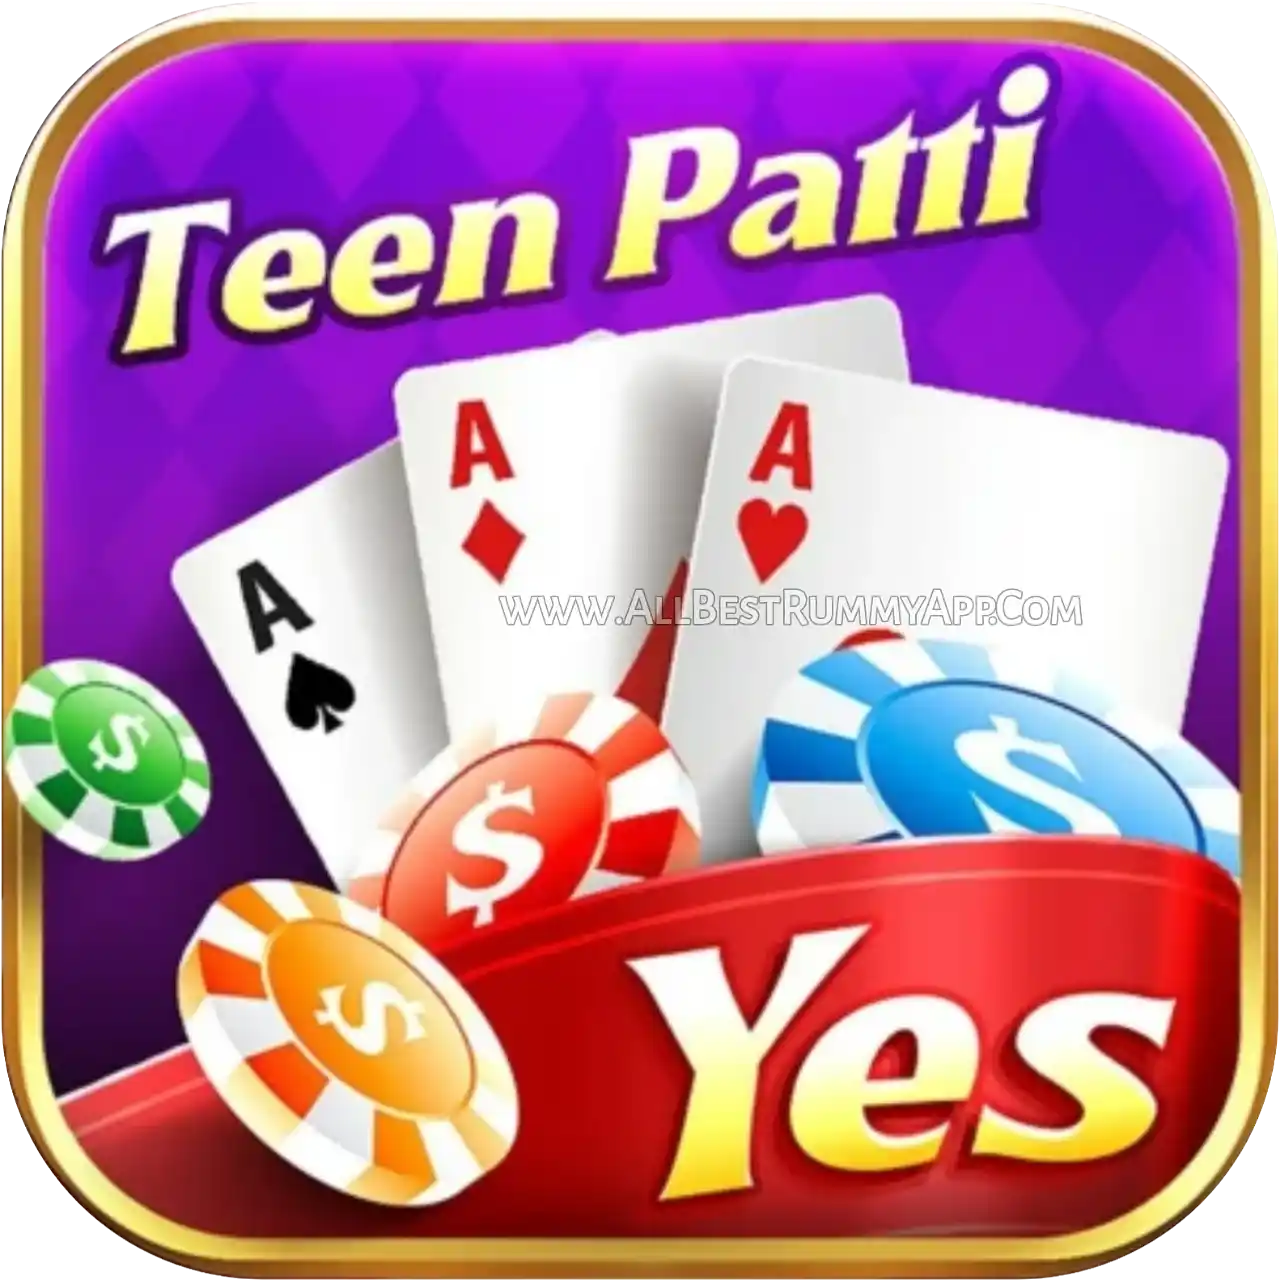 Teen Patti Yes Logo - All Best Rummy App